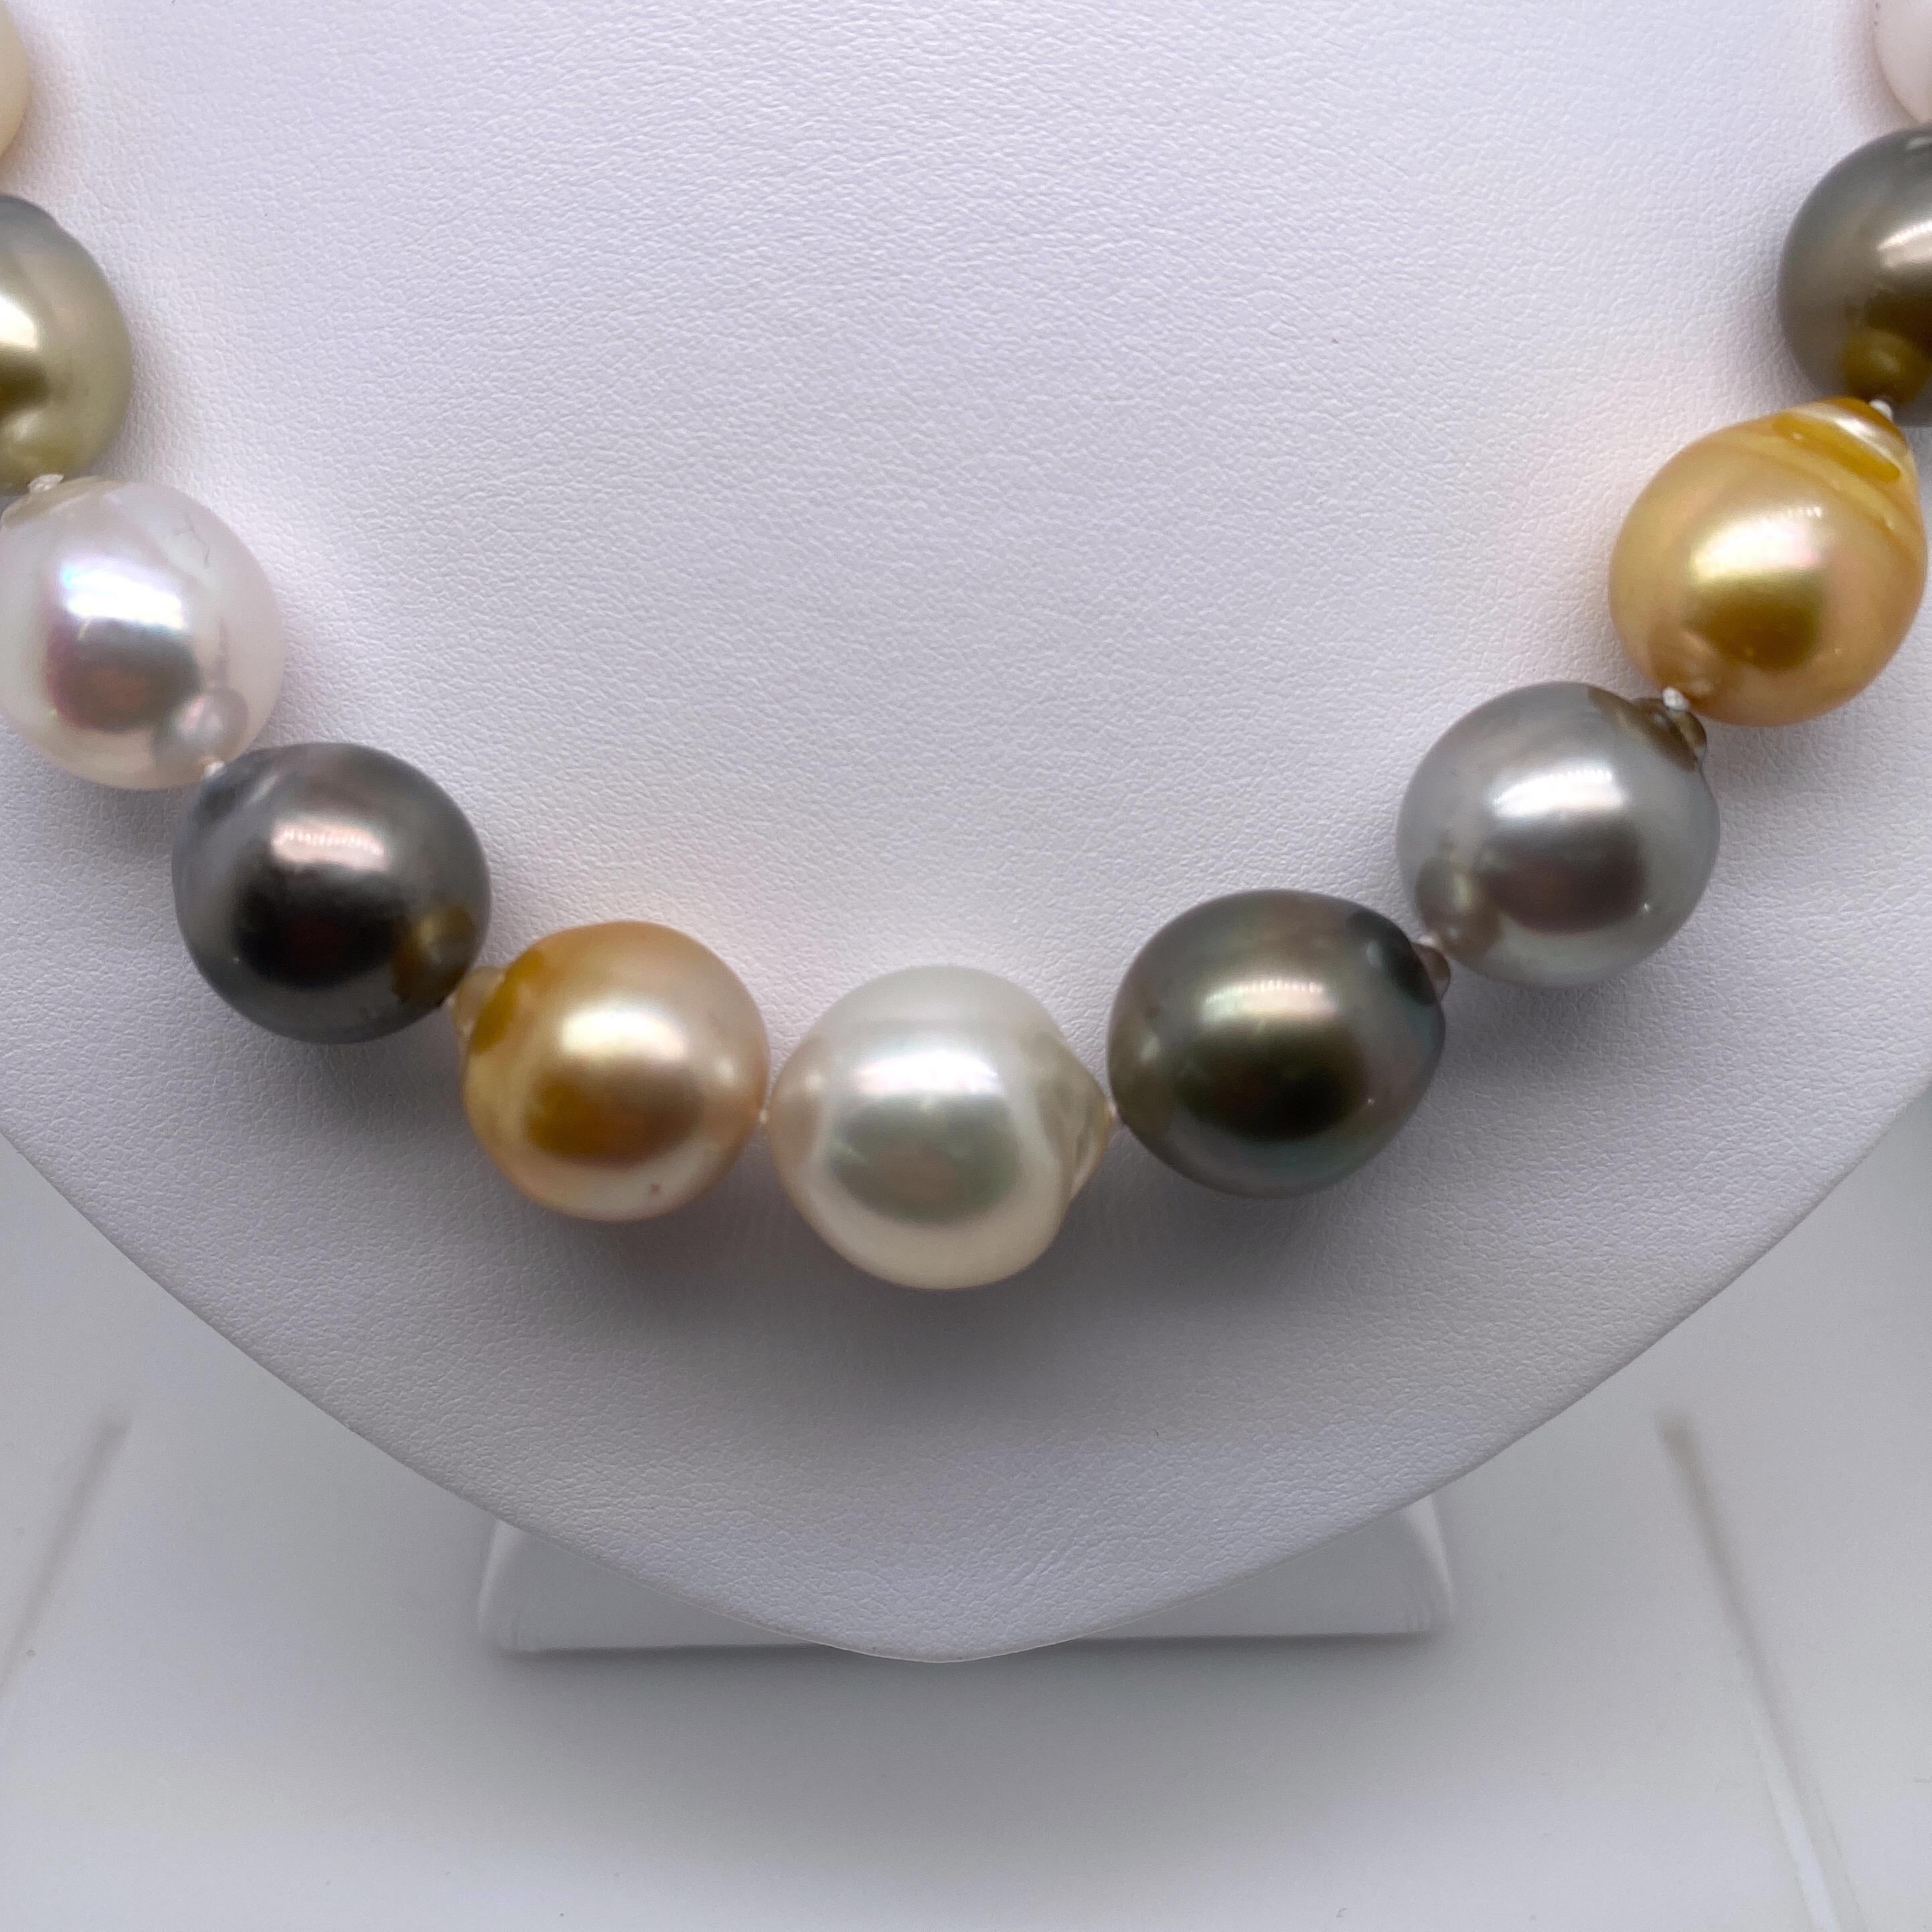 Un joli collier de 27 perles baroques multicolores comprenant des perles blanches des mers du Sud, des perles dorées des mers du Sud et des perles de Tahiti mesurant de 12 à 16 mm avec un fermoir en diamant en or jaune.
Qualité : AAA
Éclat de la